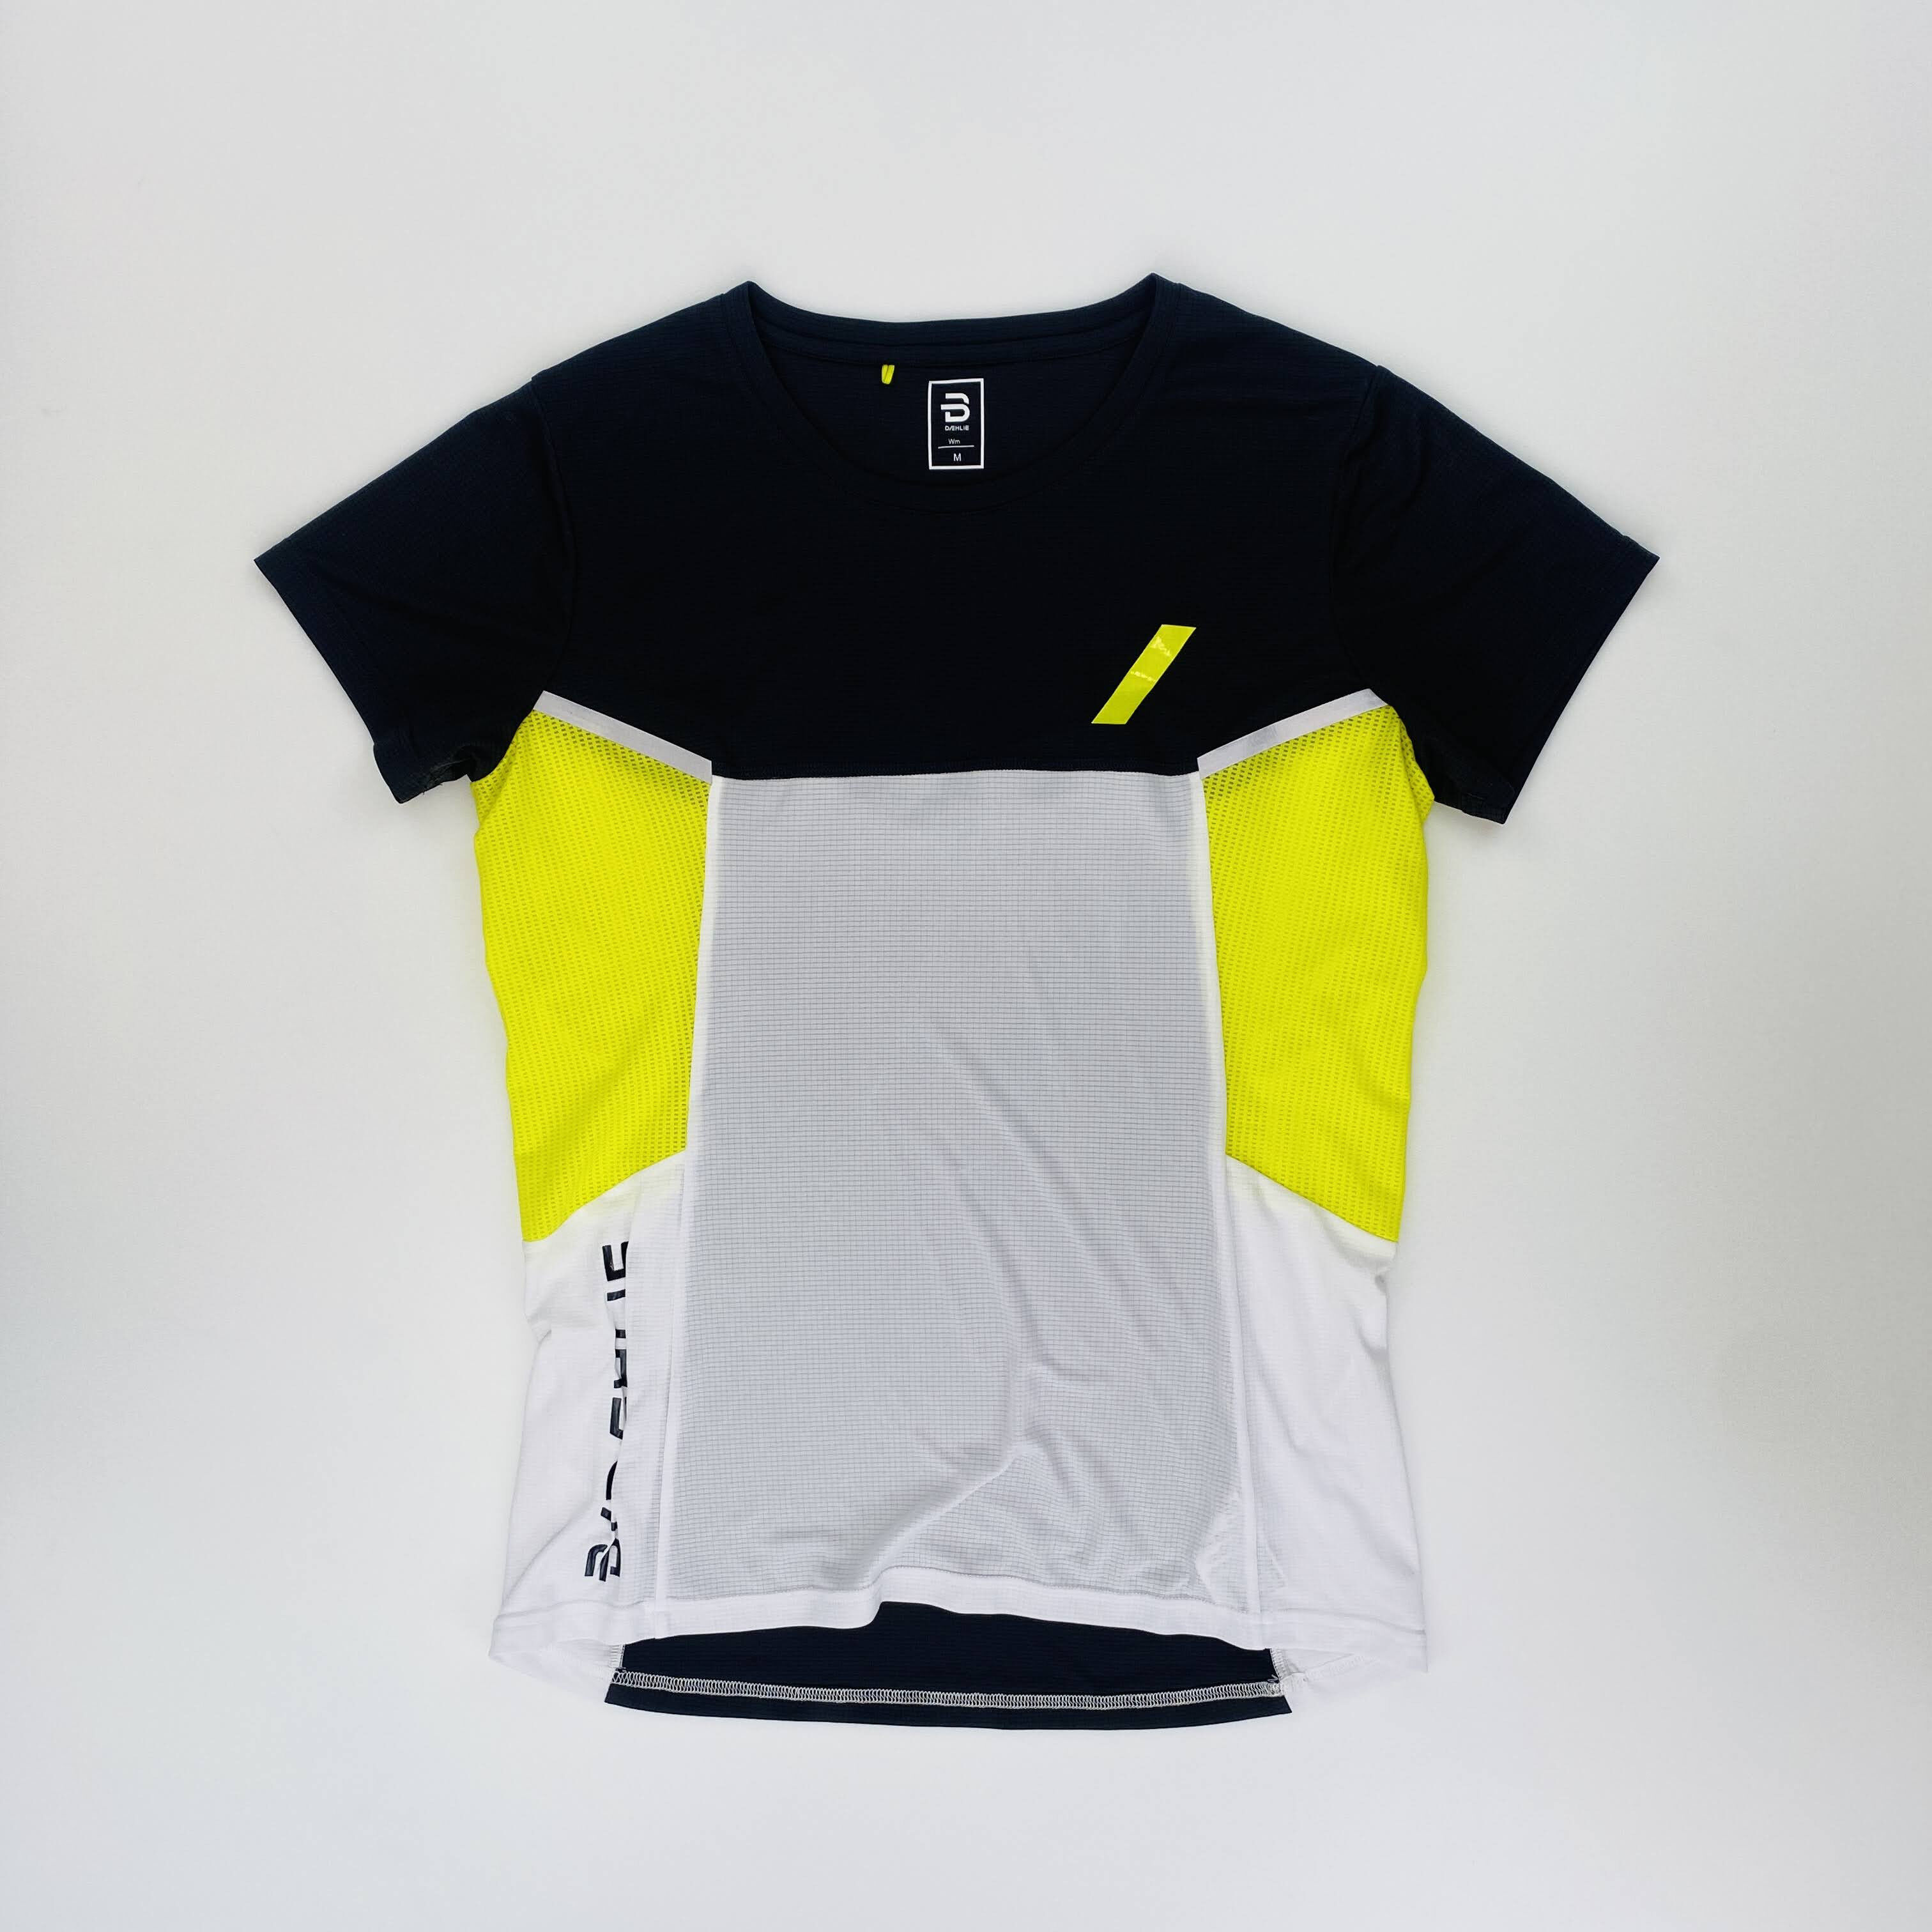 Daehlie T-Shirt Endorfin Wmn - T-shirt di seconda mano - Donna - Multicolore - M | Hardloop